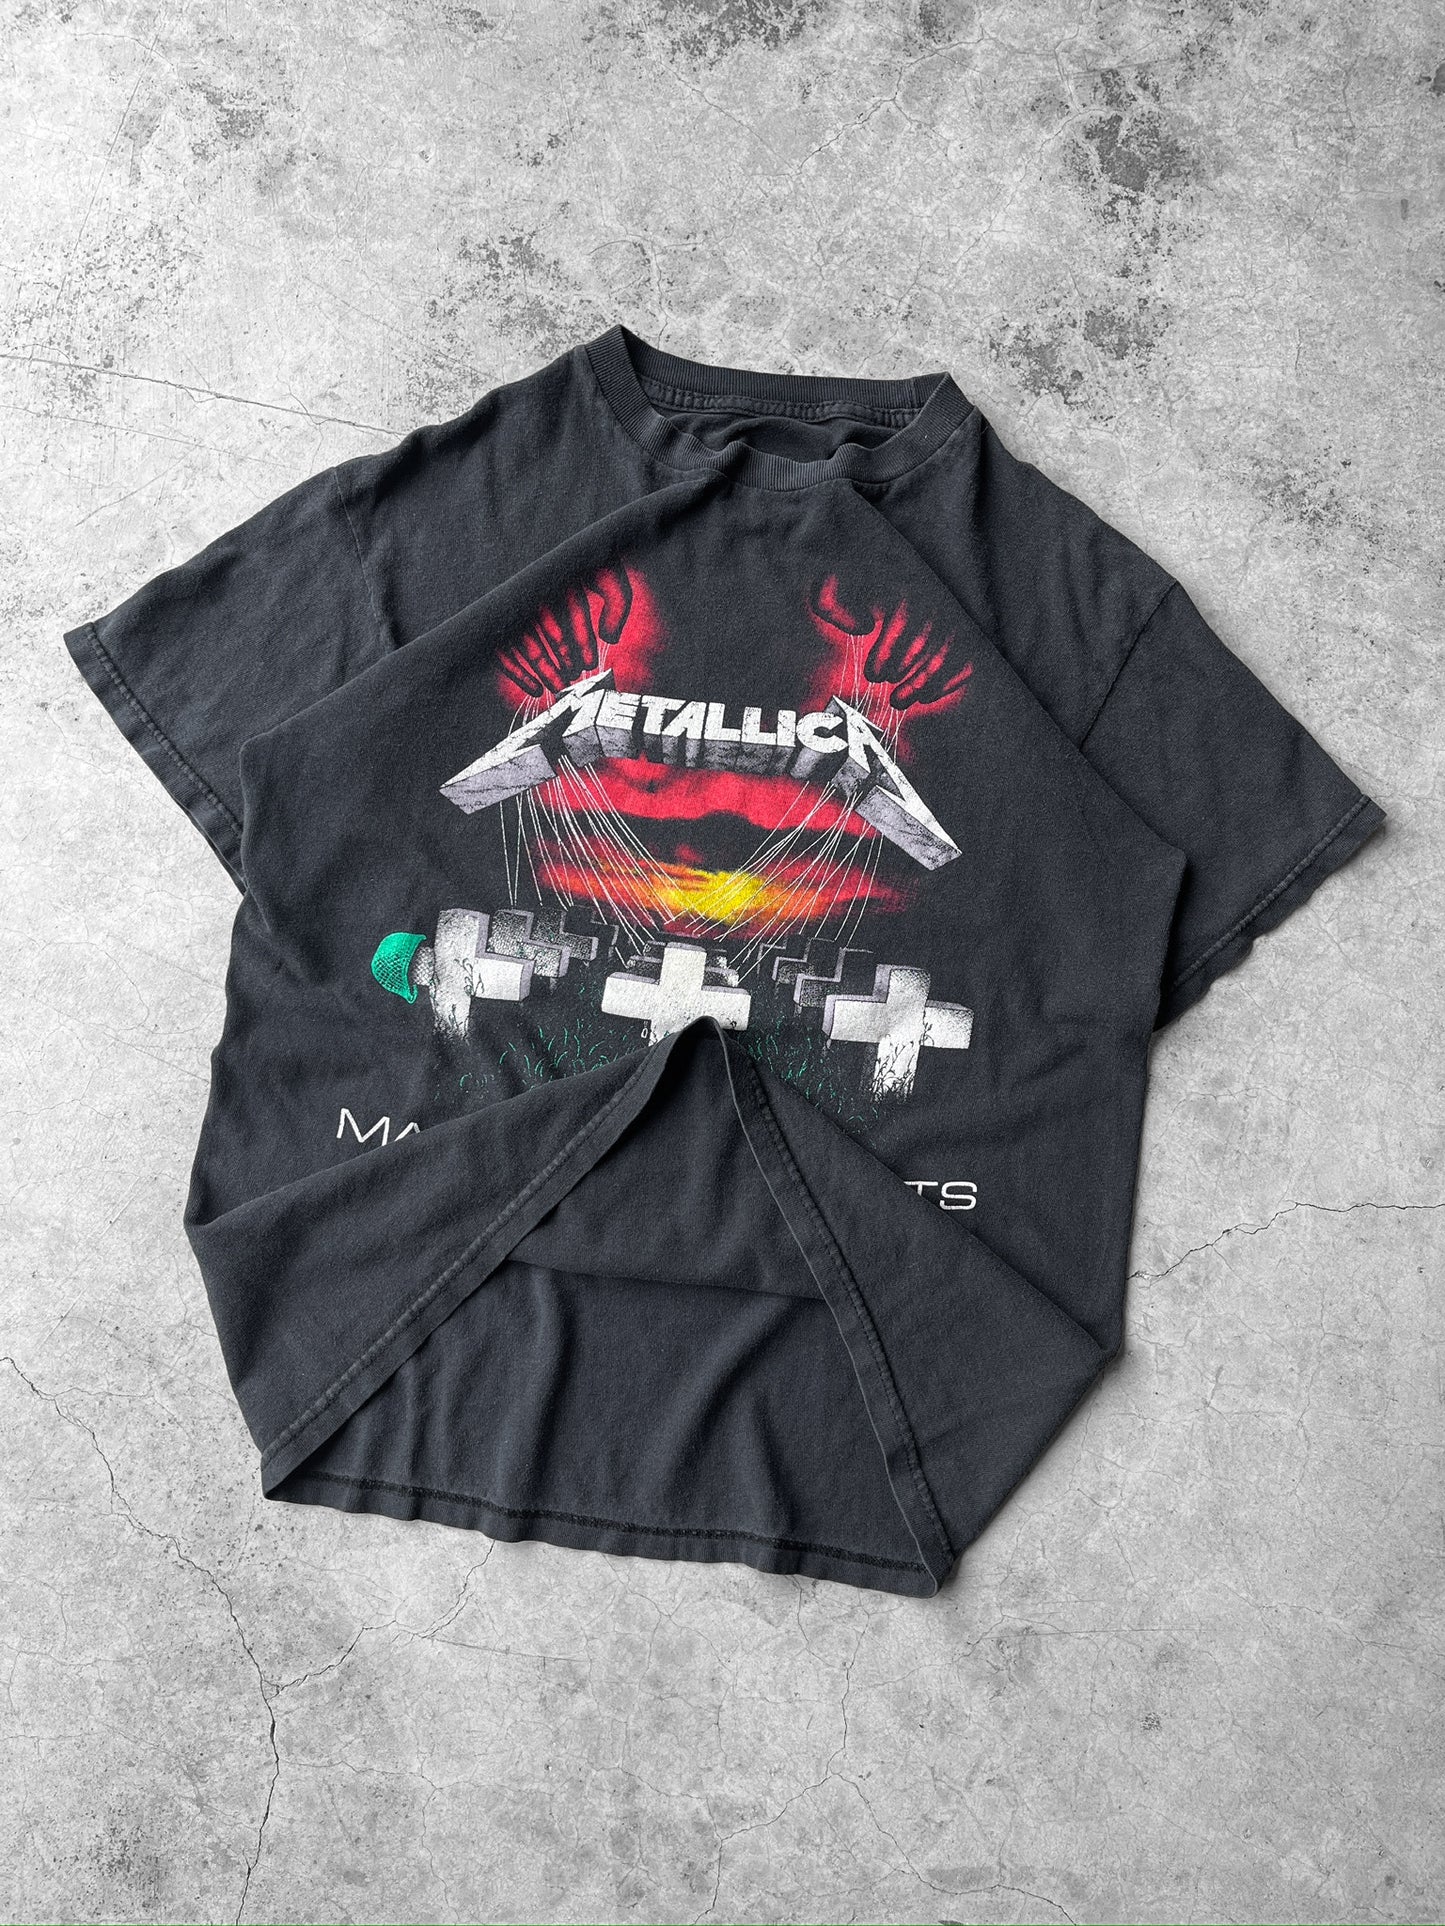 Metallica Master of Puppets Band Tour Shirt